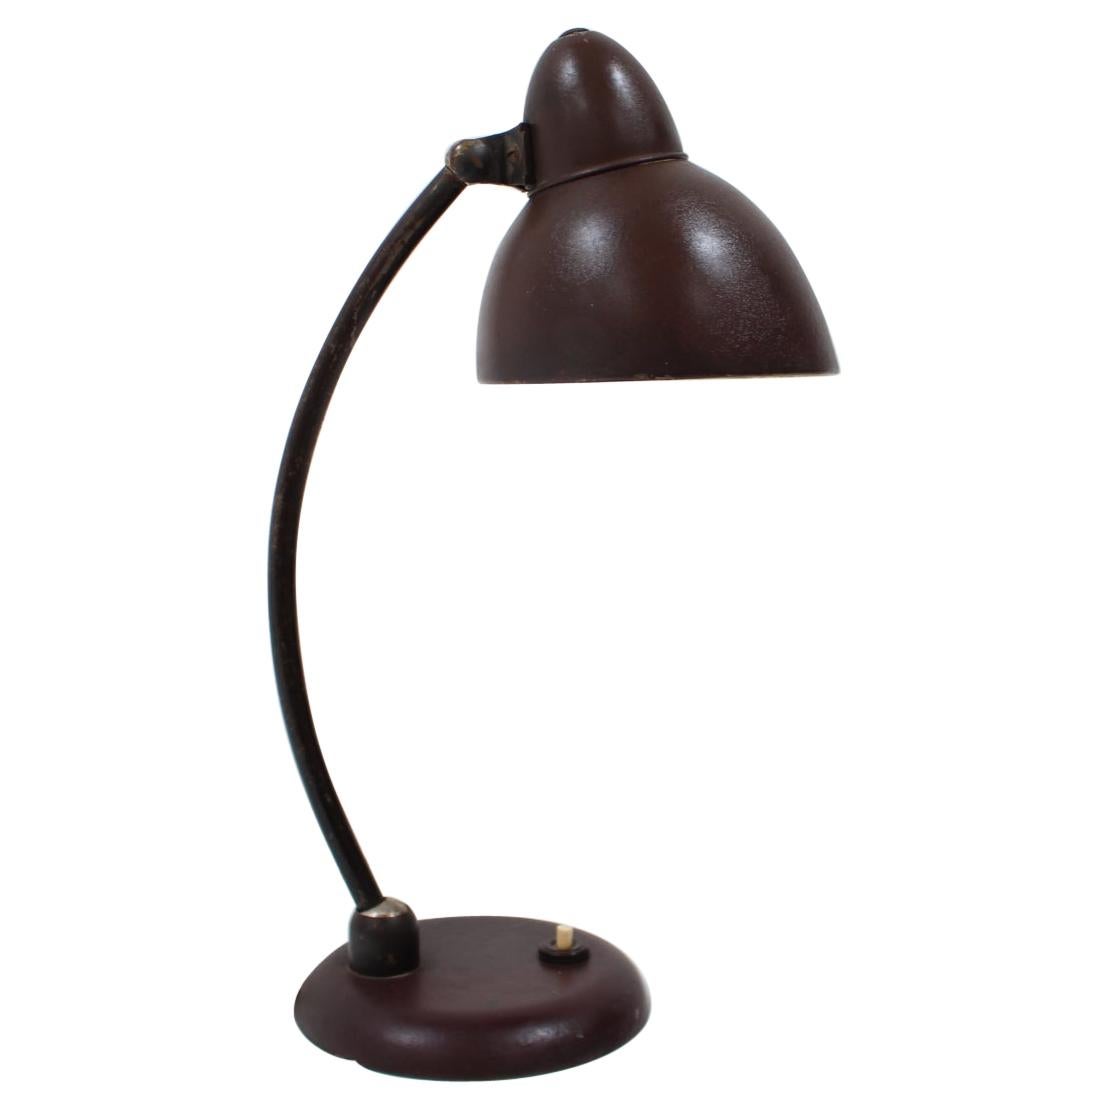 Art-Deco Table Lamp Designed by František Anýž 1930's For Sale